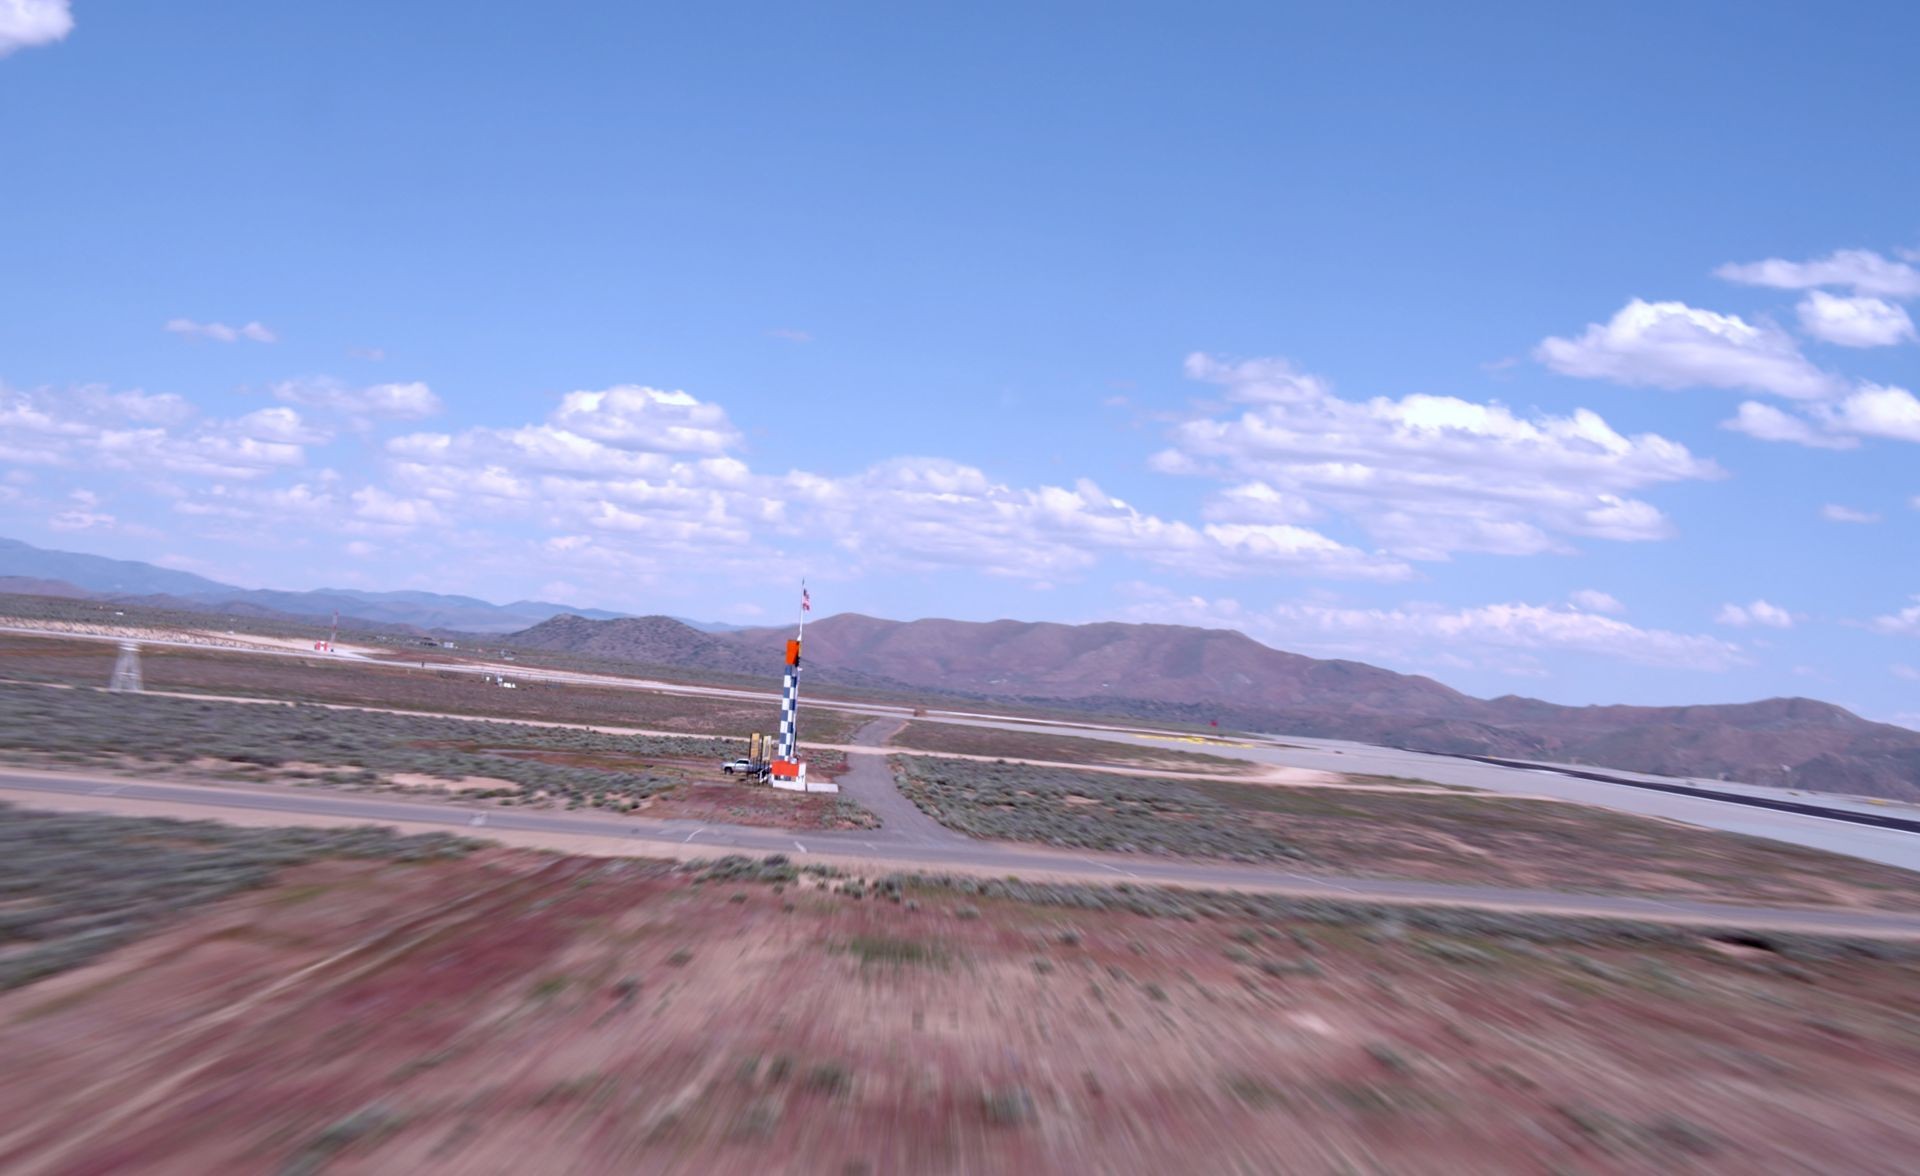 Air Racers 3D (Imax 3D)